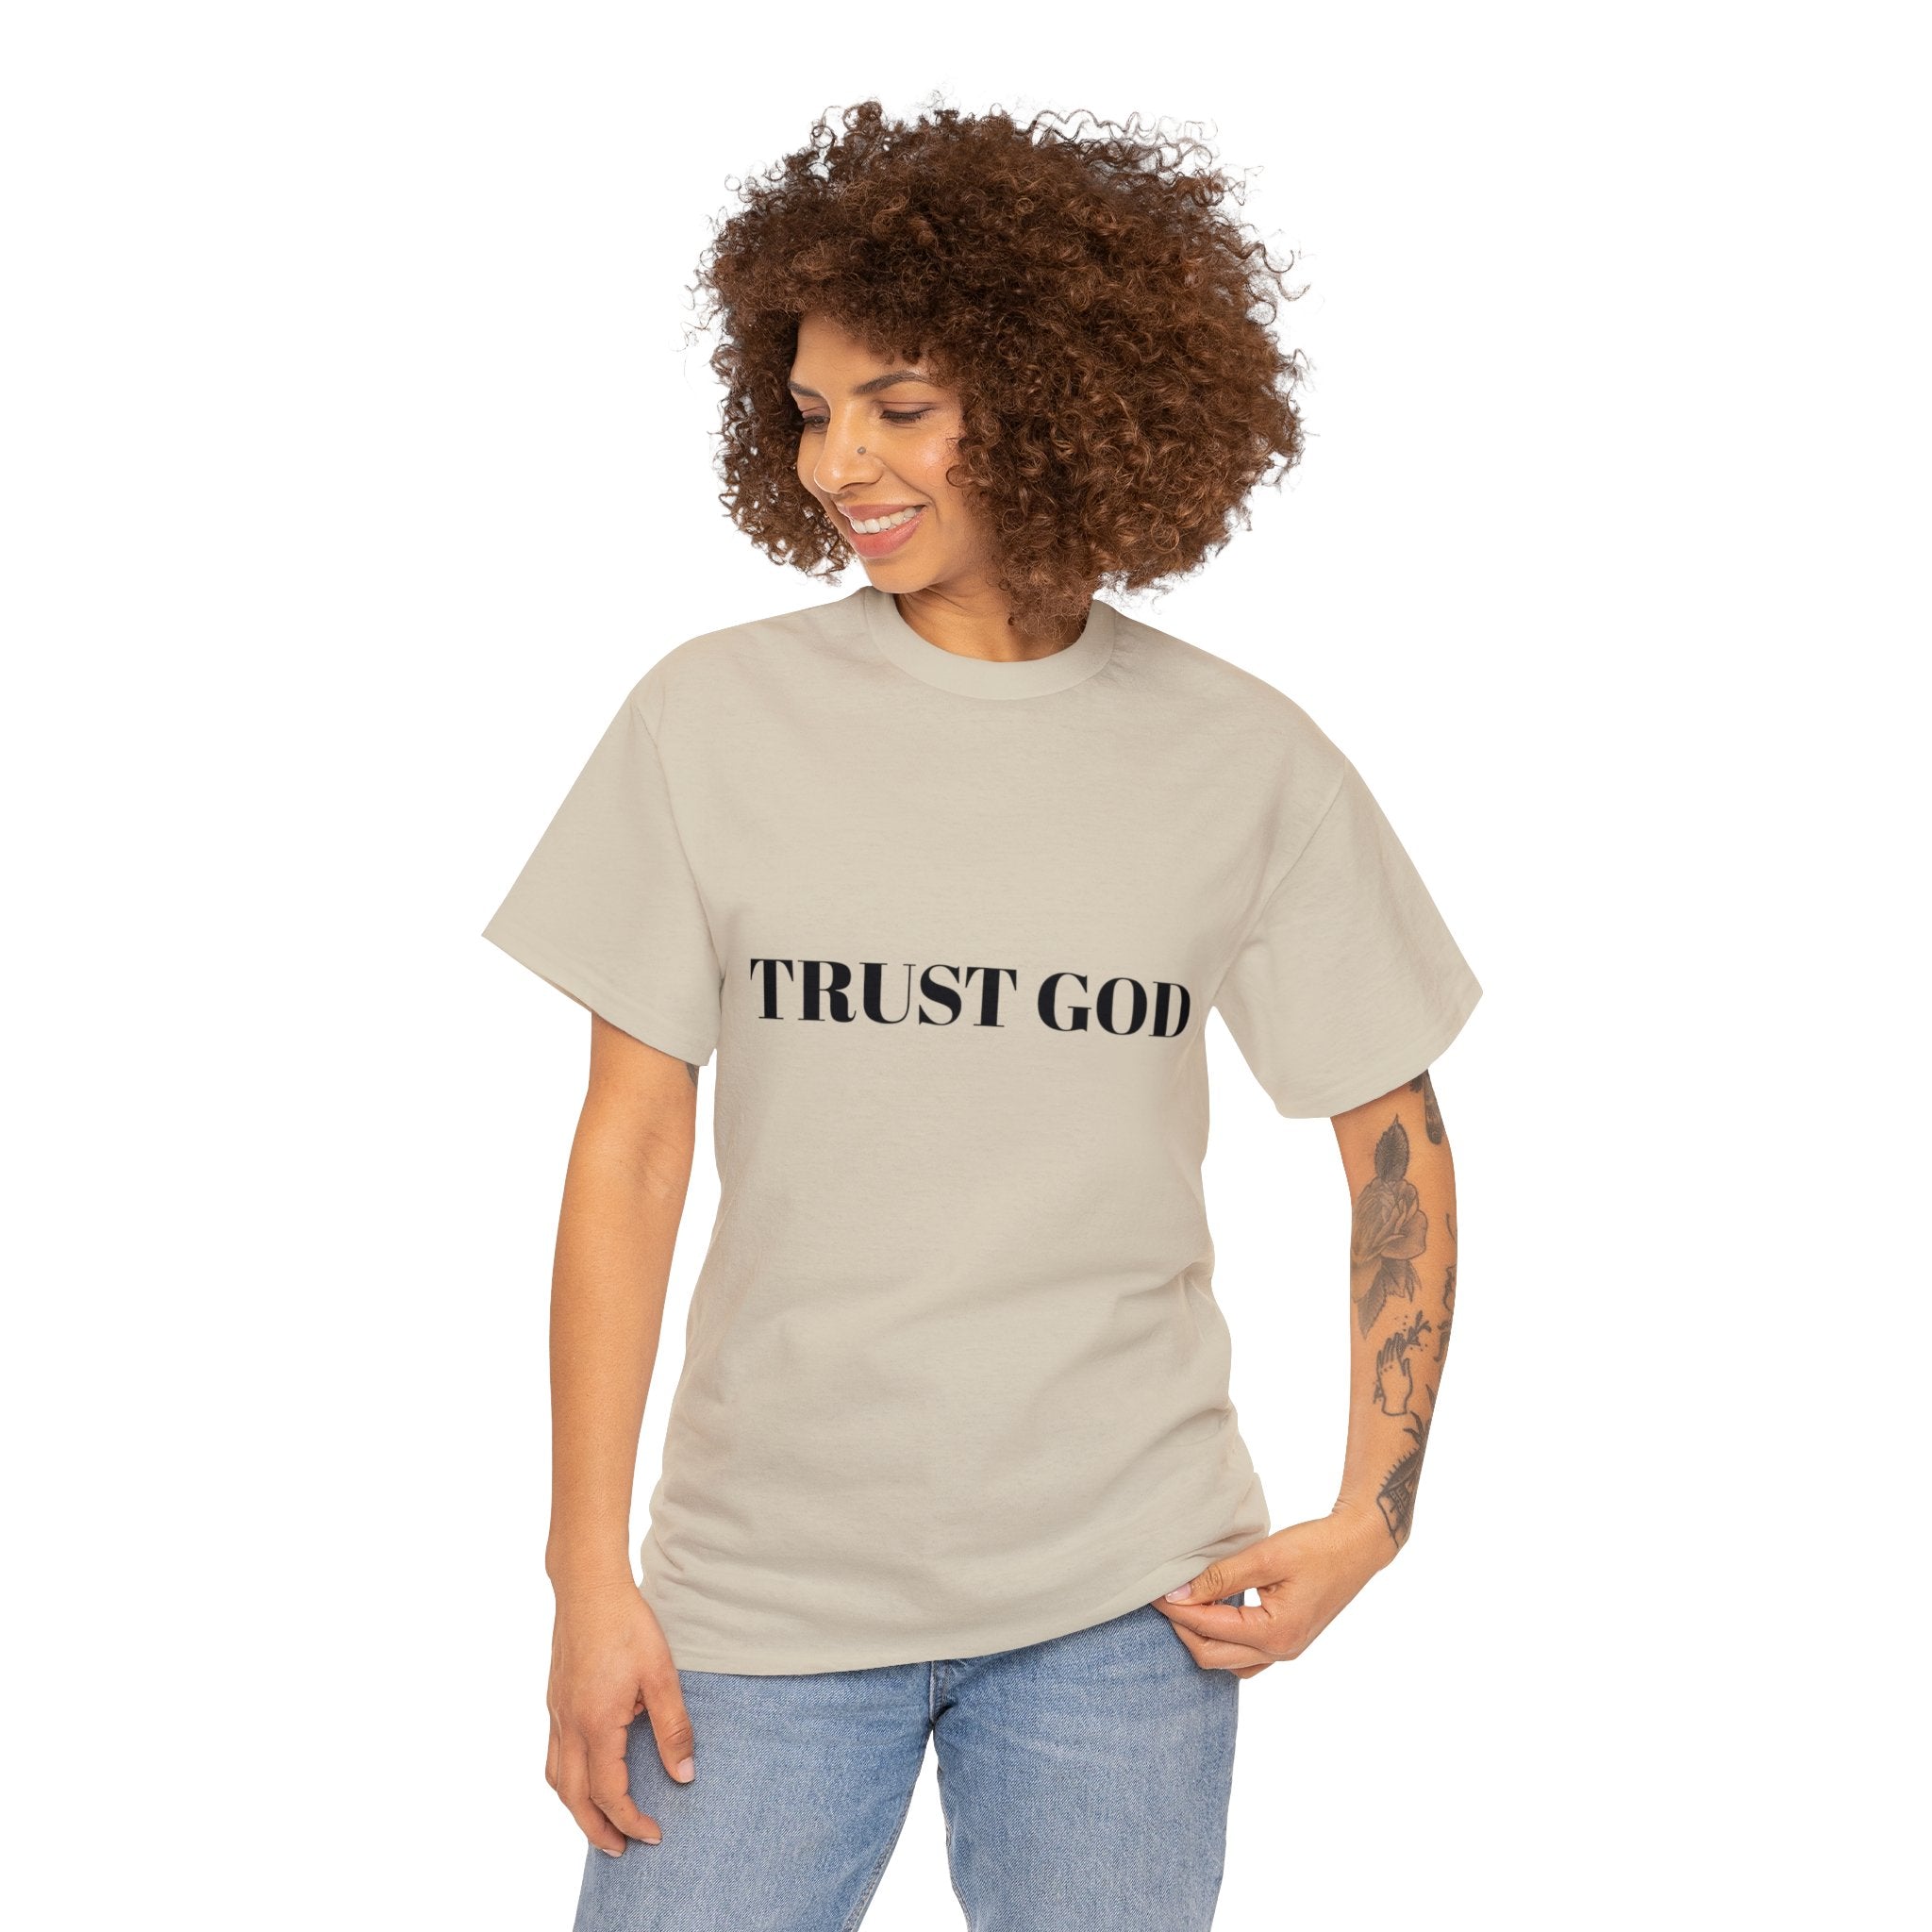 Trust God tshirt